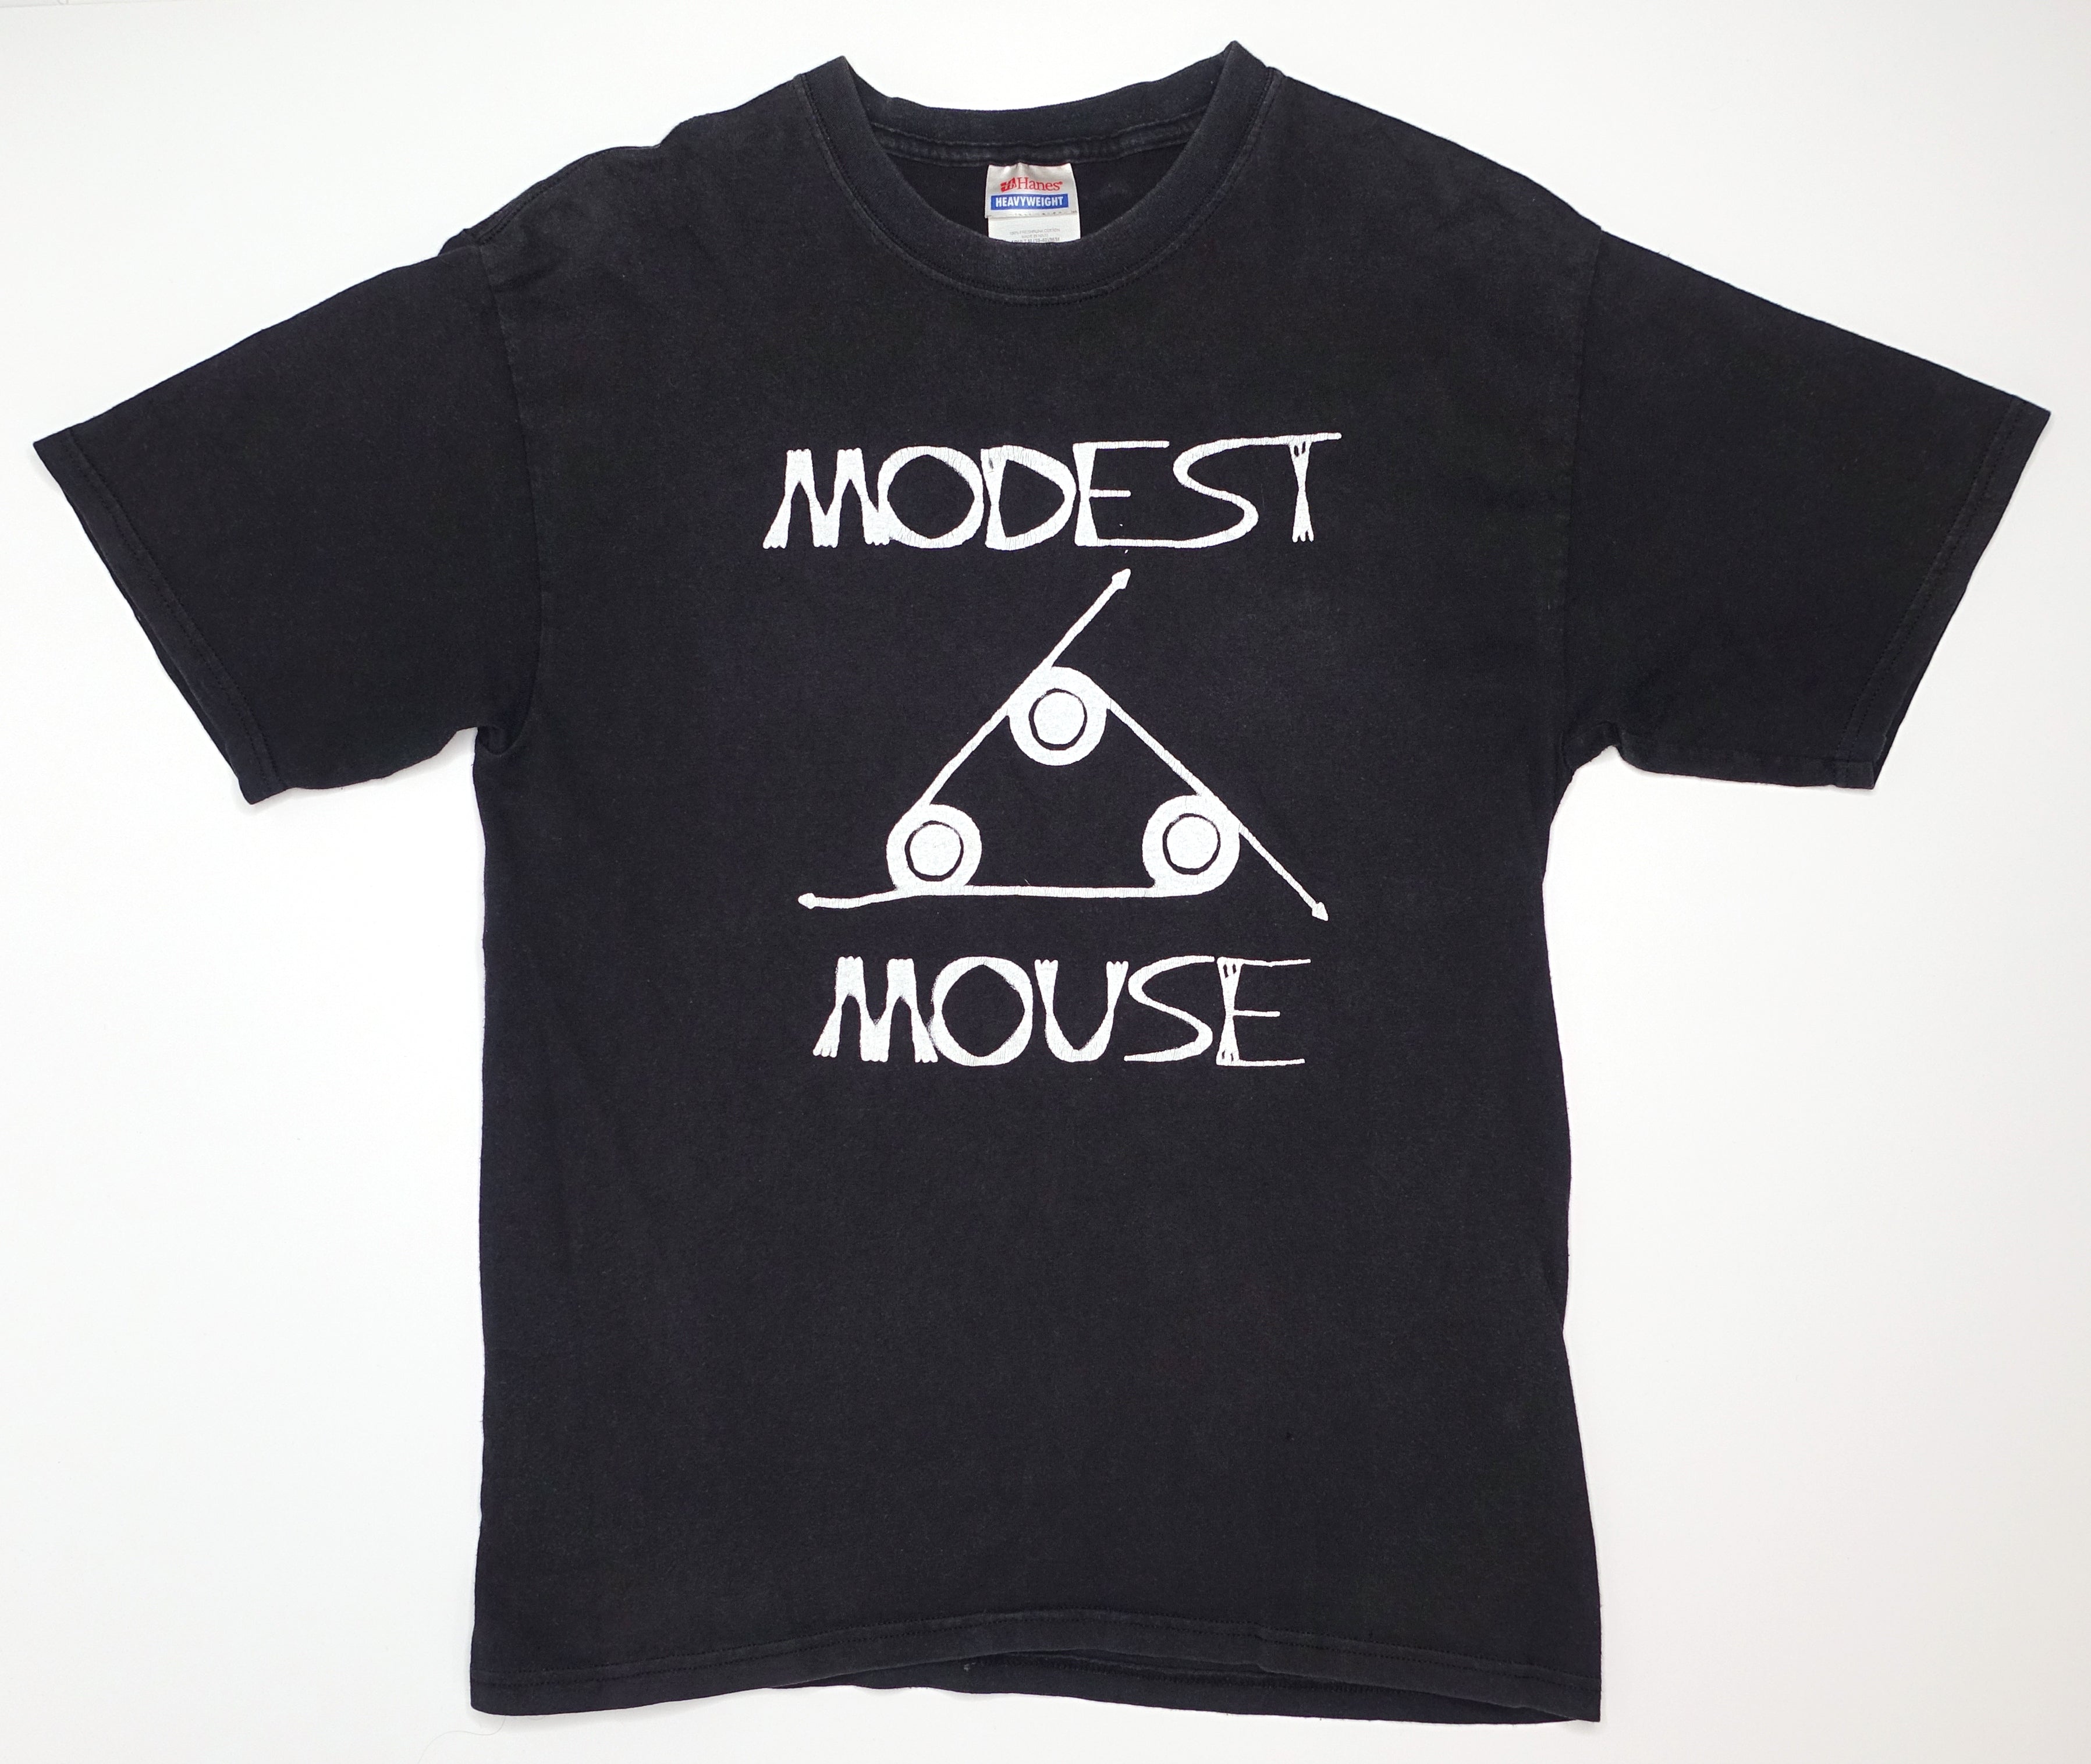 Modest Mouse - Moon & Antarctica 2000 Australian Tour Shirt Size Medium